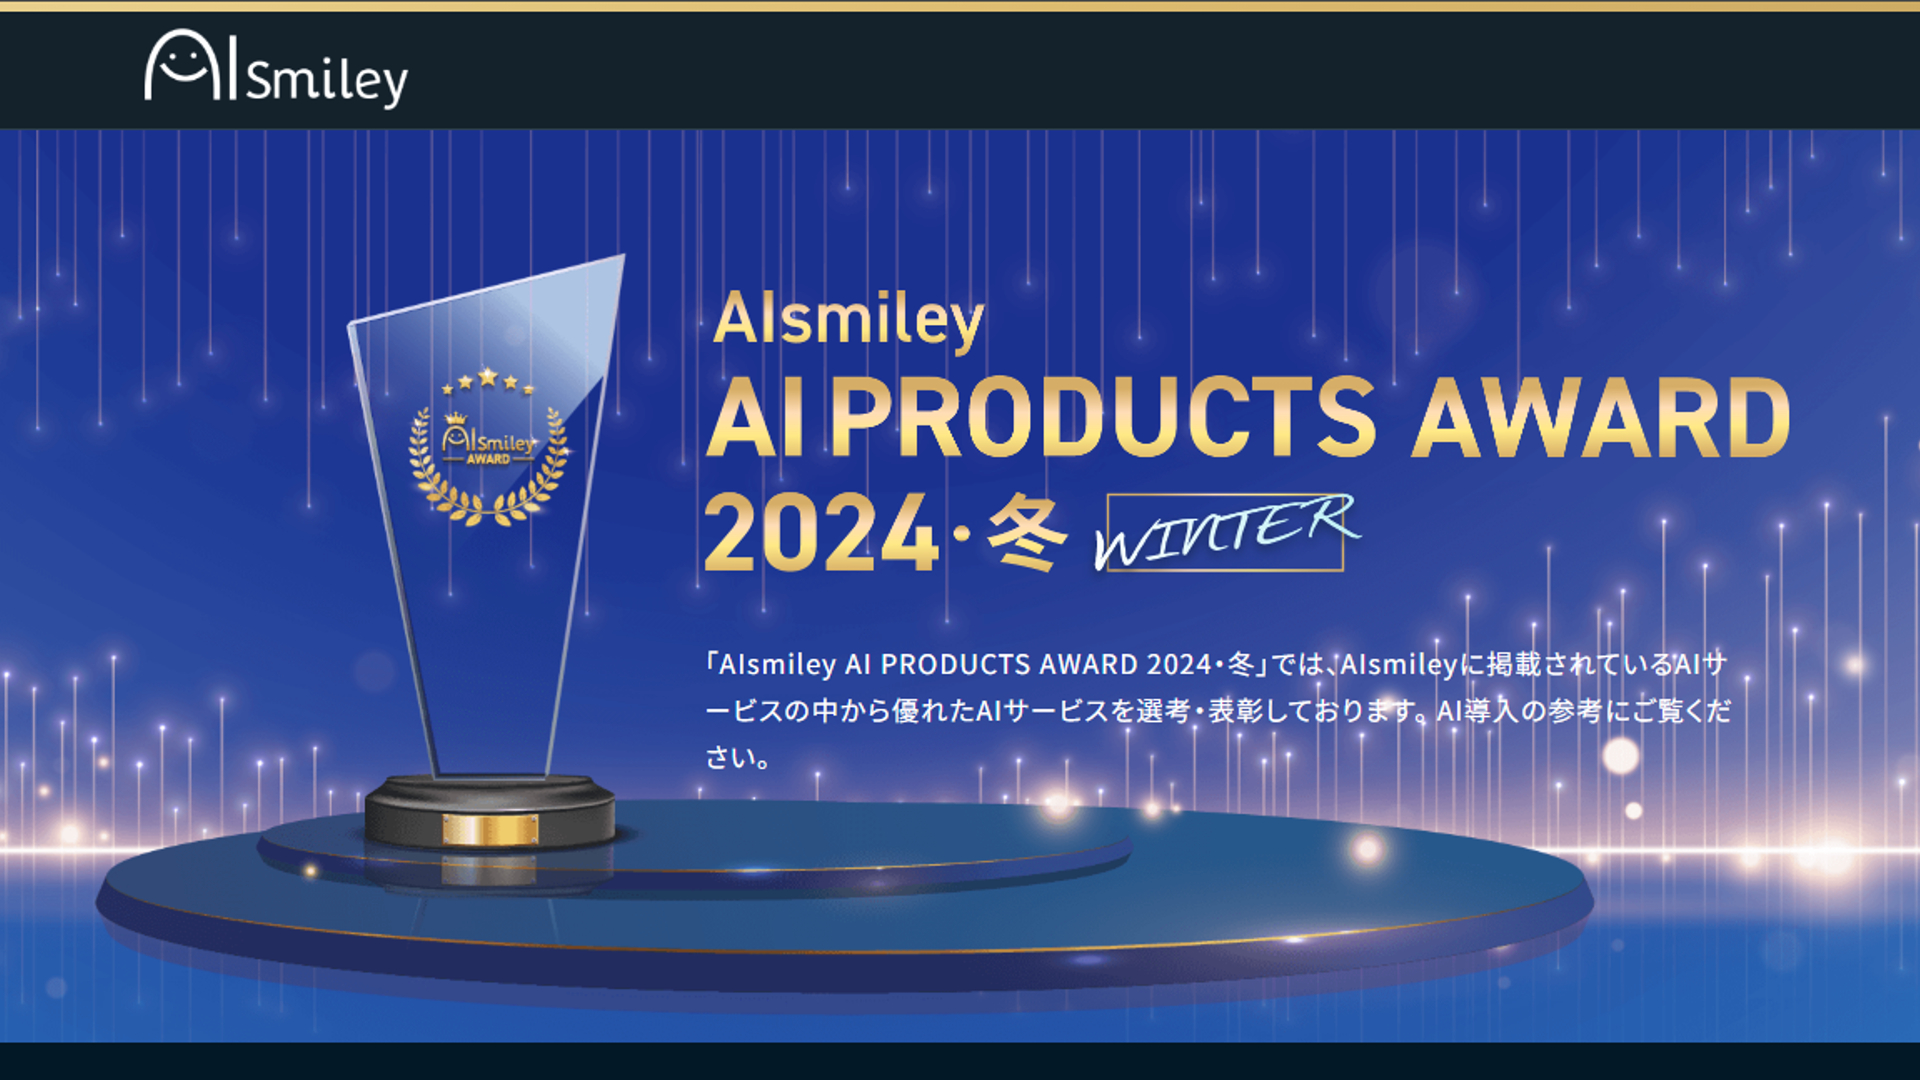 AIsmiley AI PRODUCTS AWARD 2024 WINTER｜DXを推進するAIポータルメディア「AIsmiley」